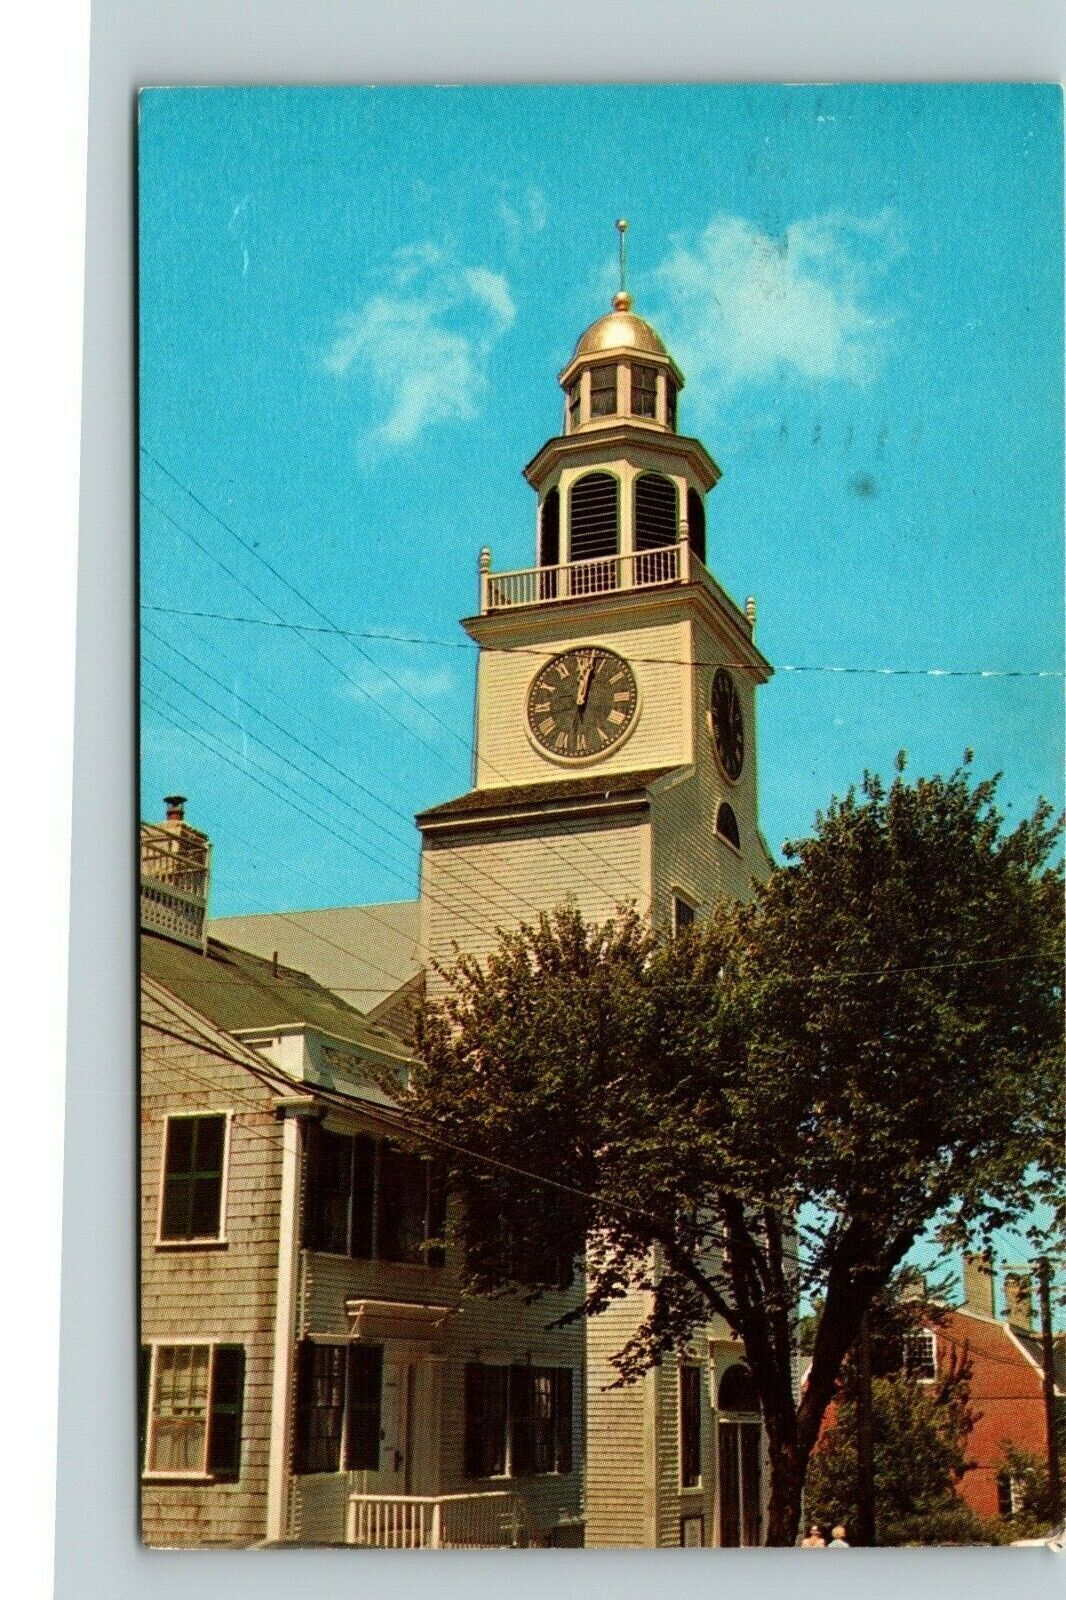 Postcard Nantucket's Town Clock Orange Street Unitarian Universalists Mass